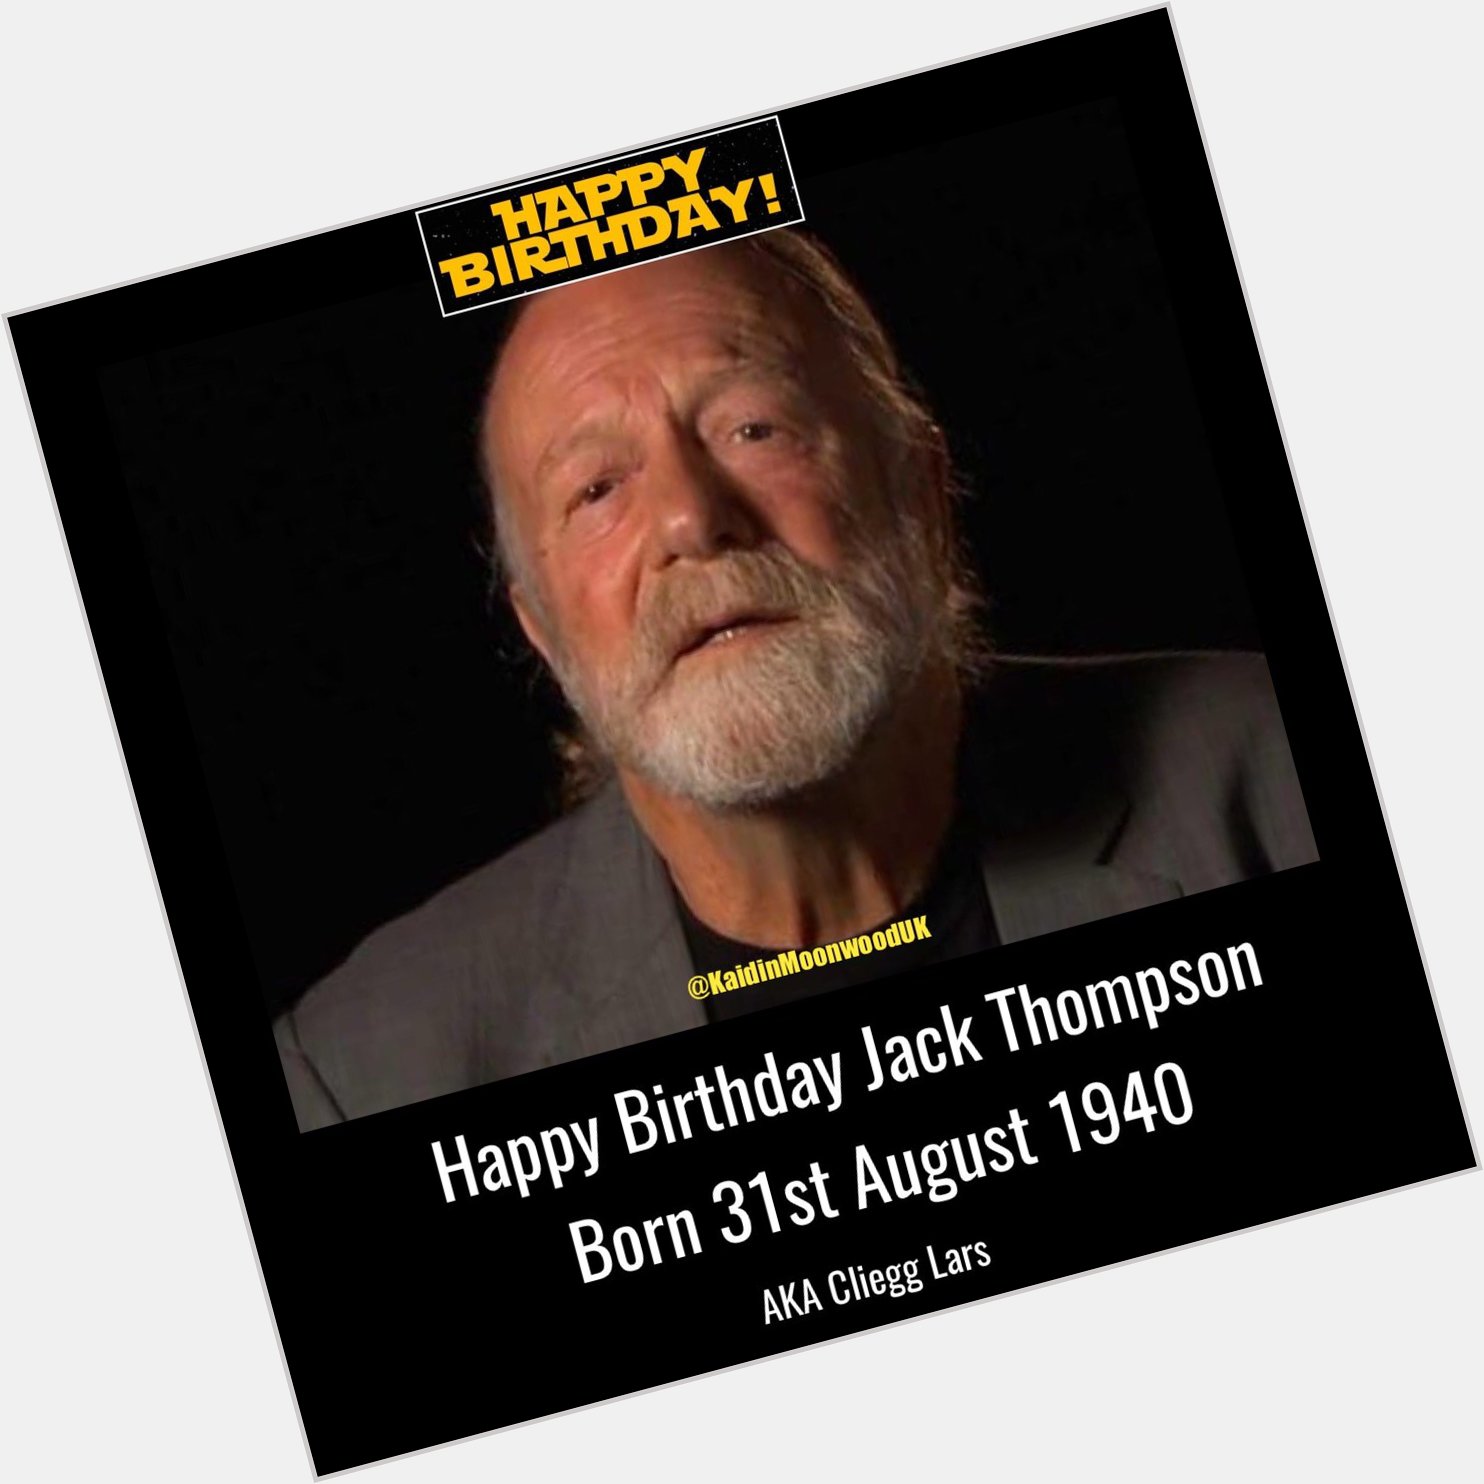 Happy Birthday Jack Thompson aka Cliegg Lars born 31st August 1940.   